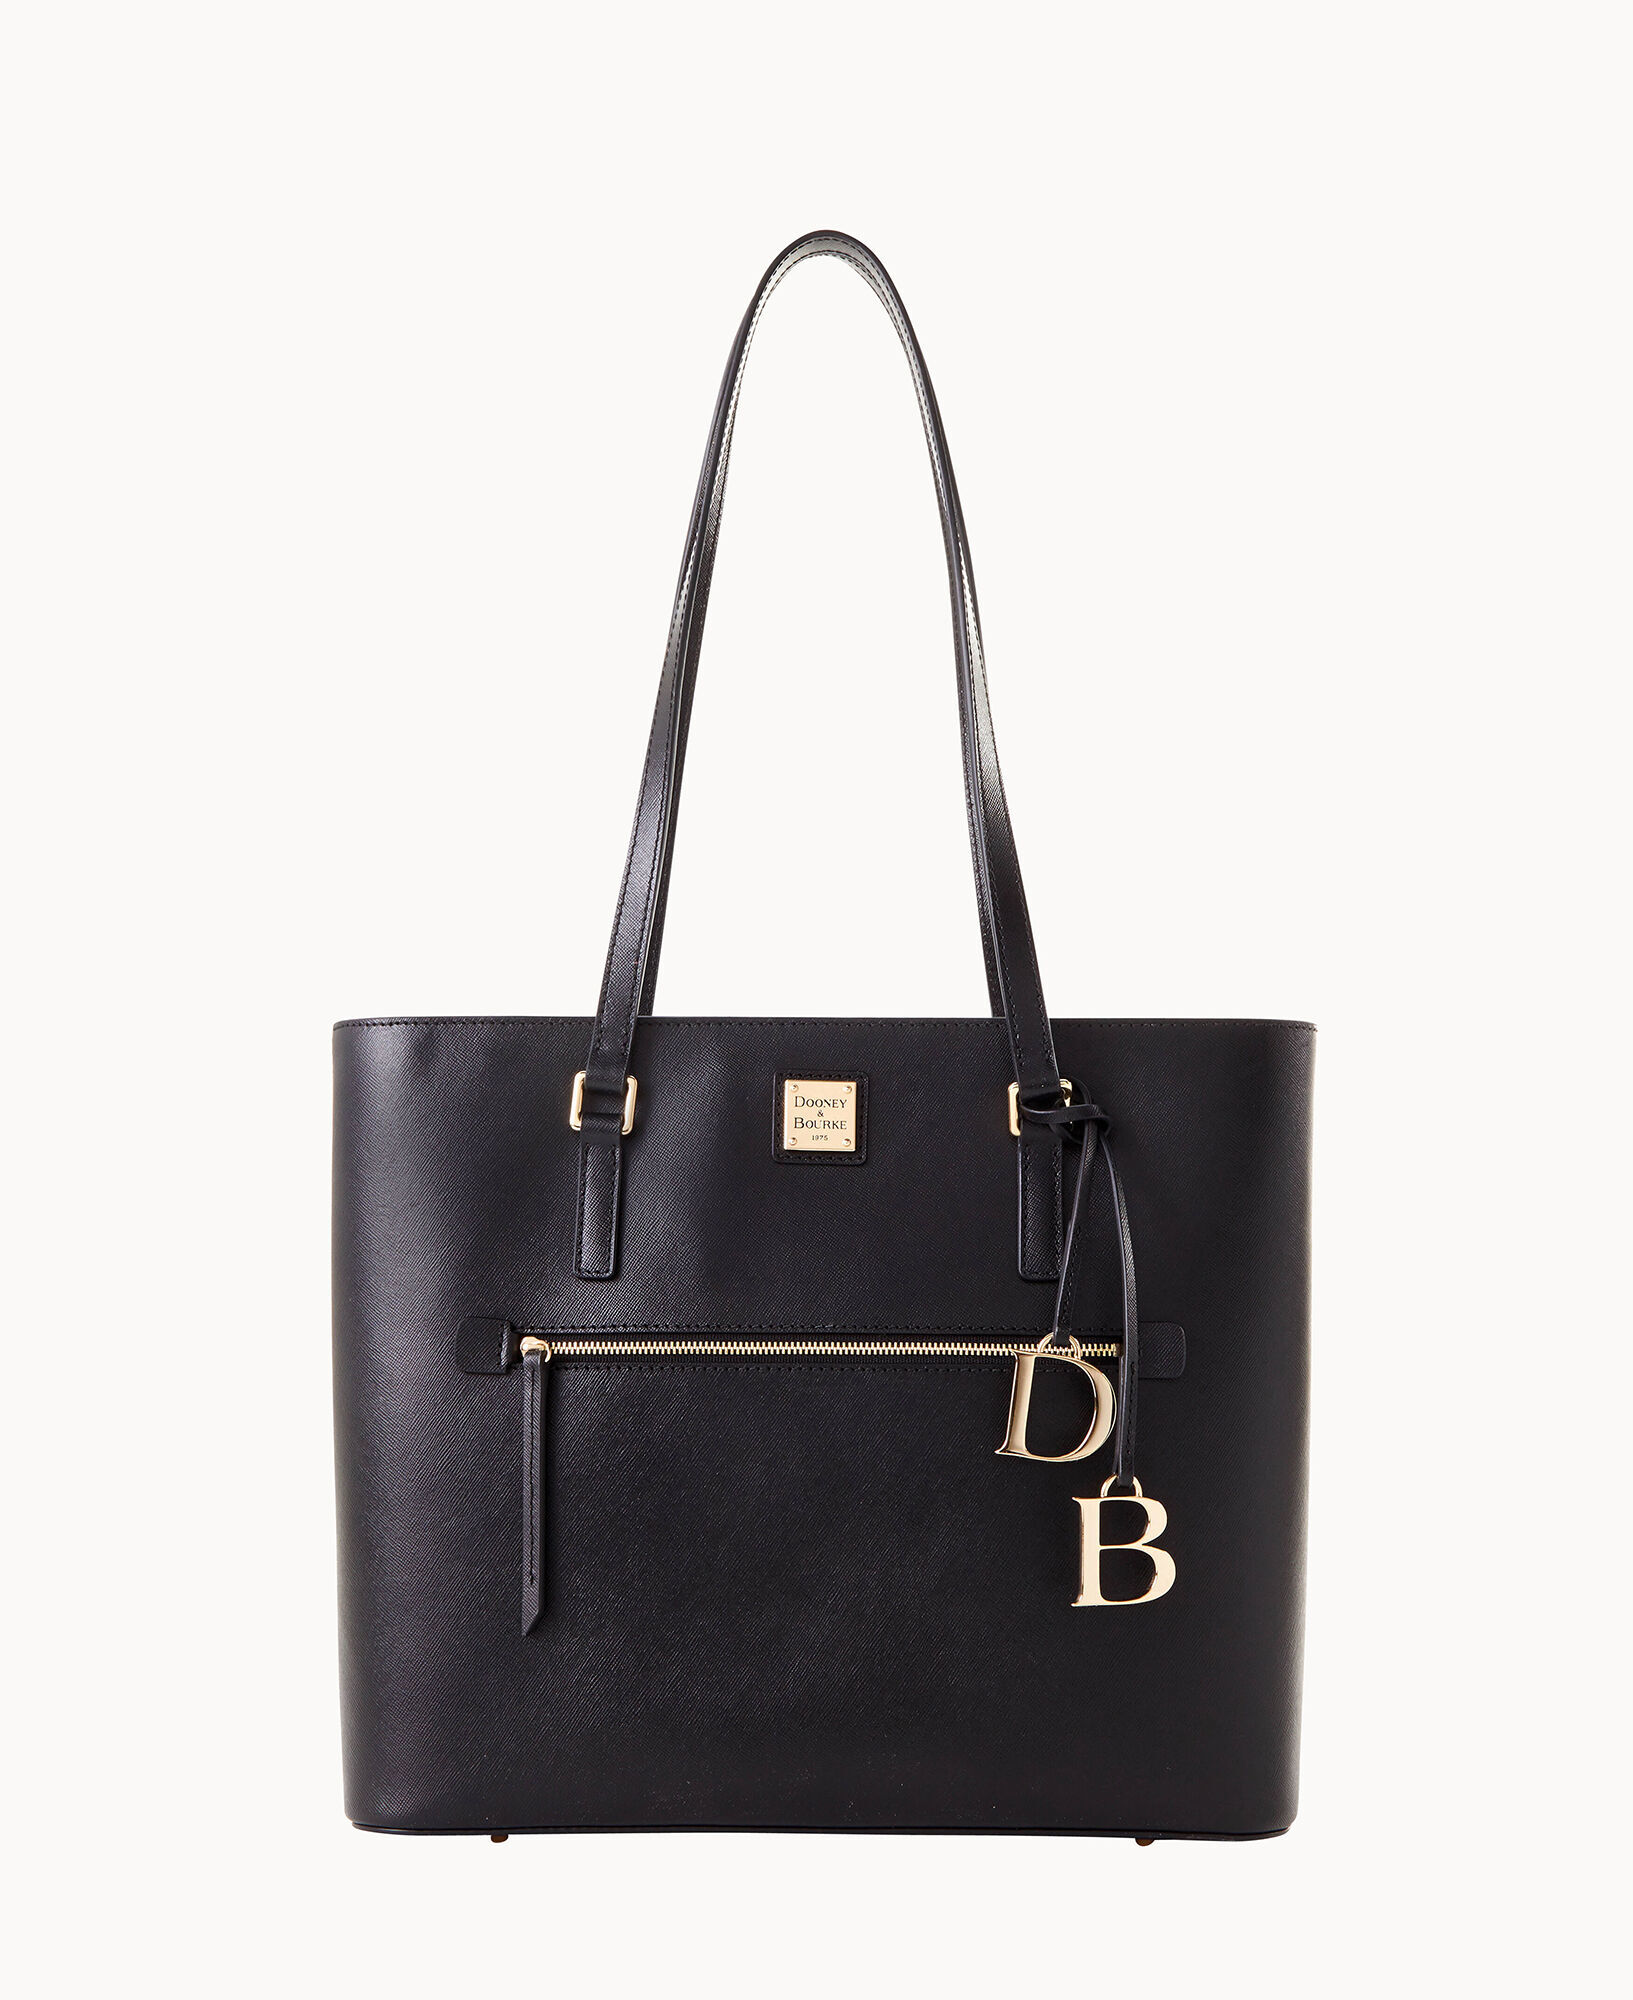 Dooney & Bourke Saffiano Shopper Tote Bag